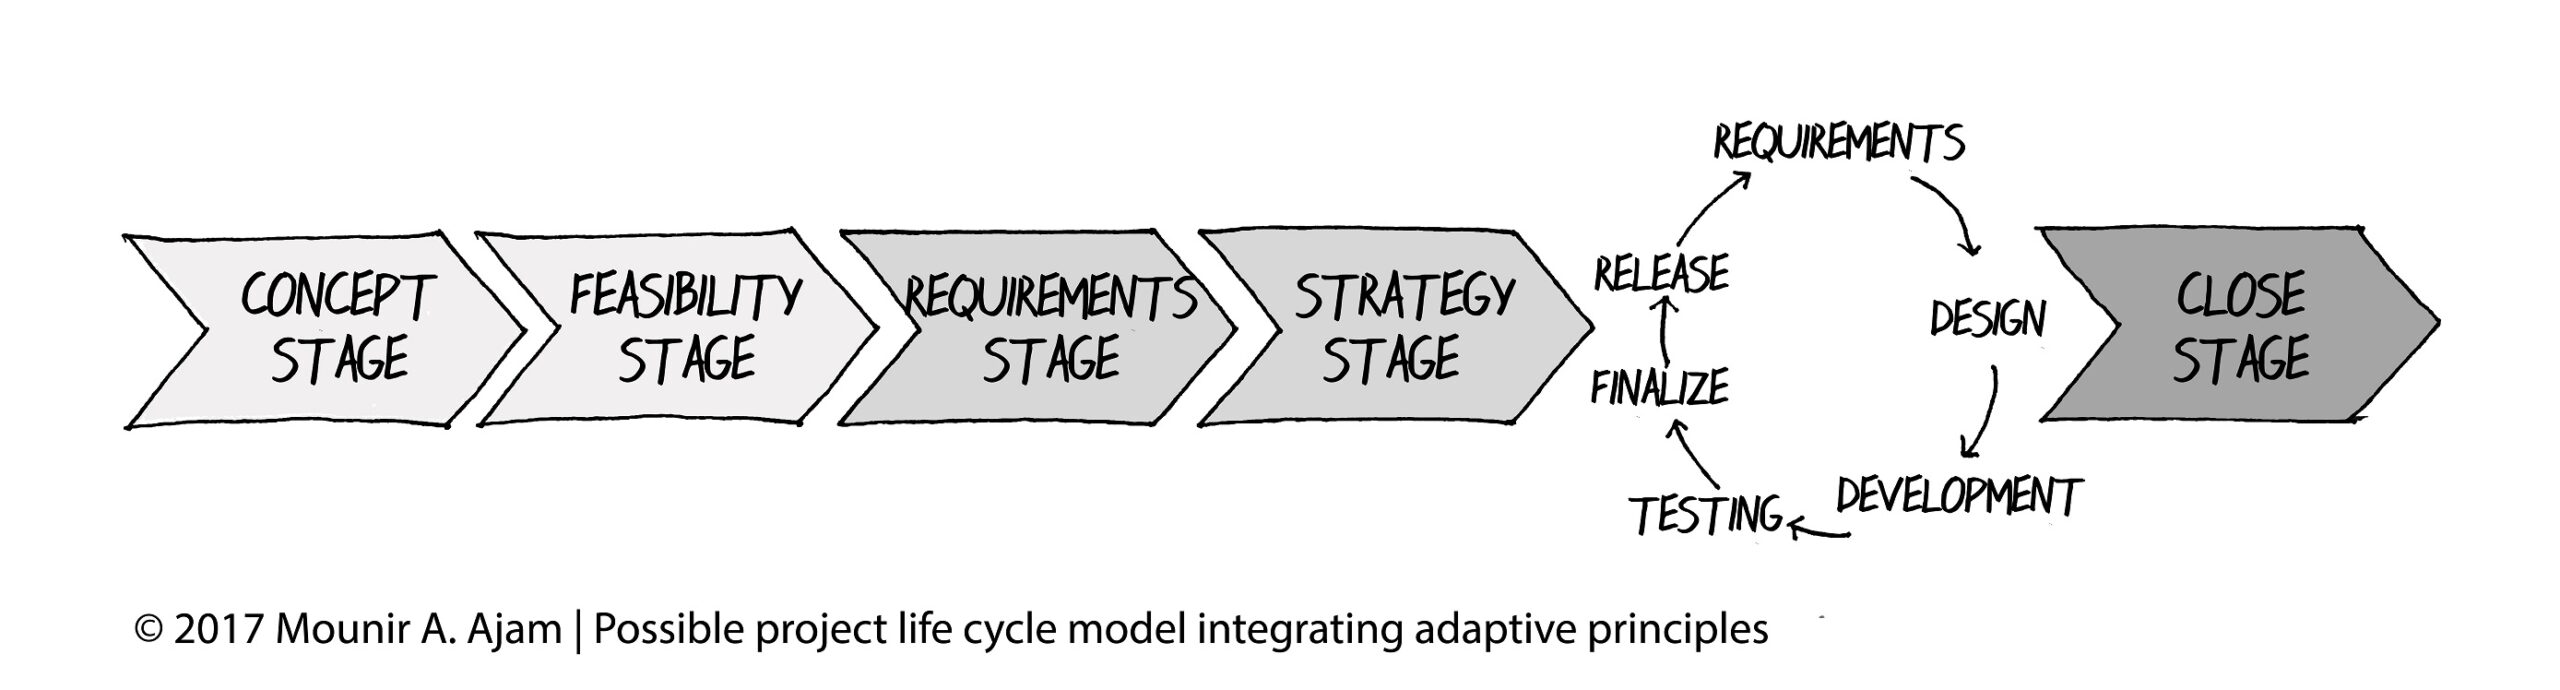 Possible project life cycle model integrating adaptive principles